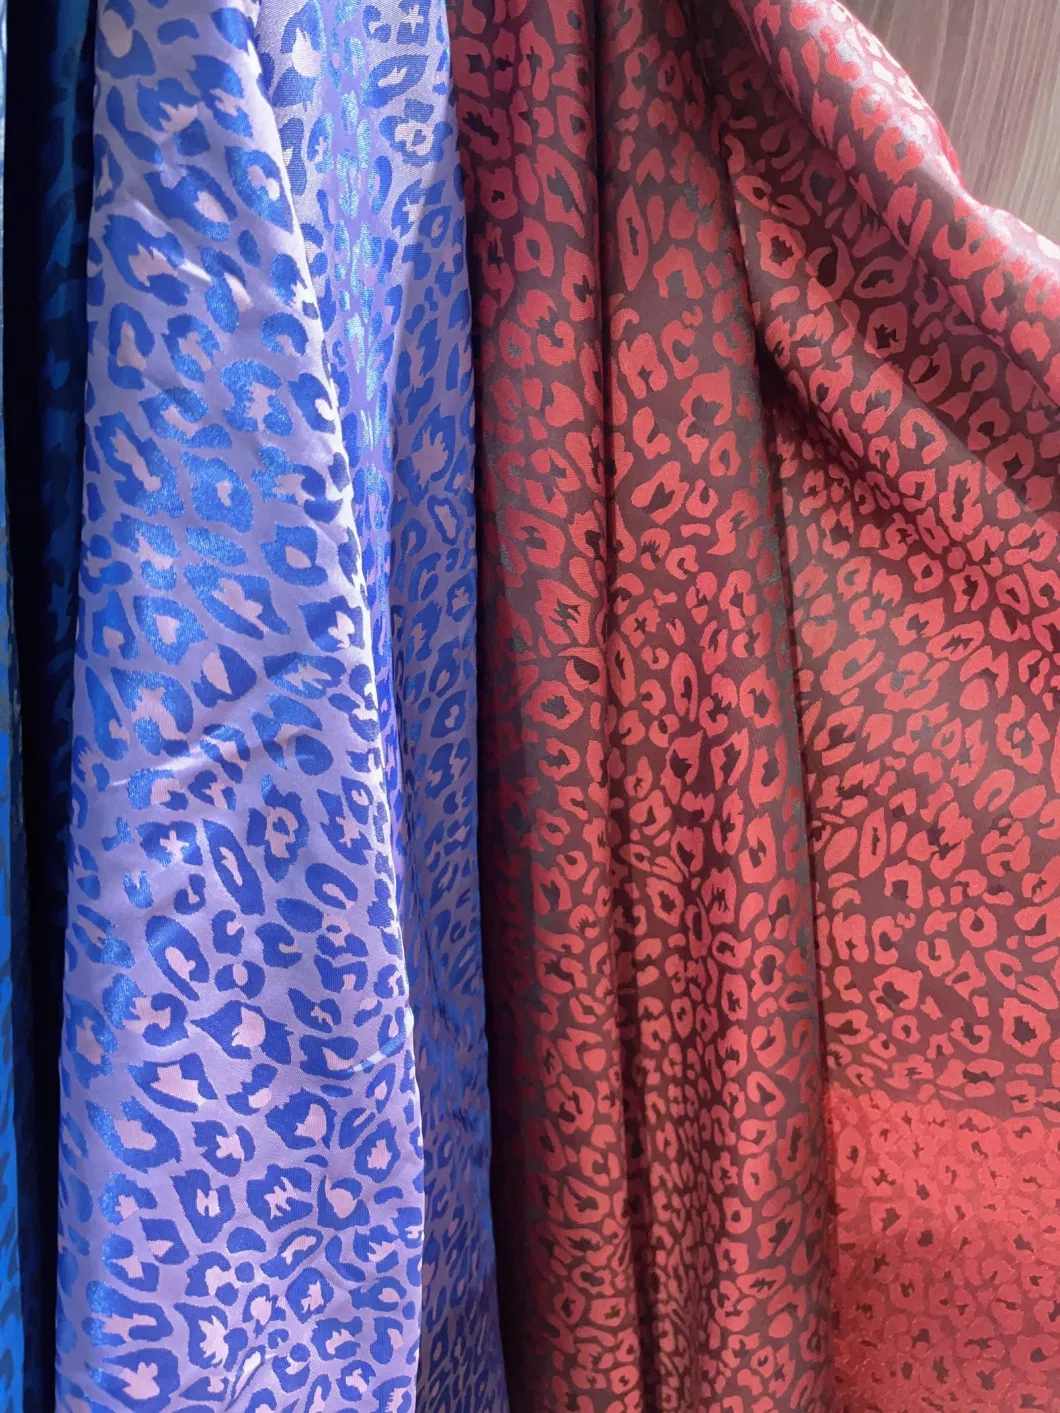 Leopard Print Jacquard Fabric Material